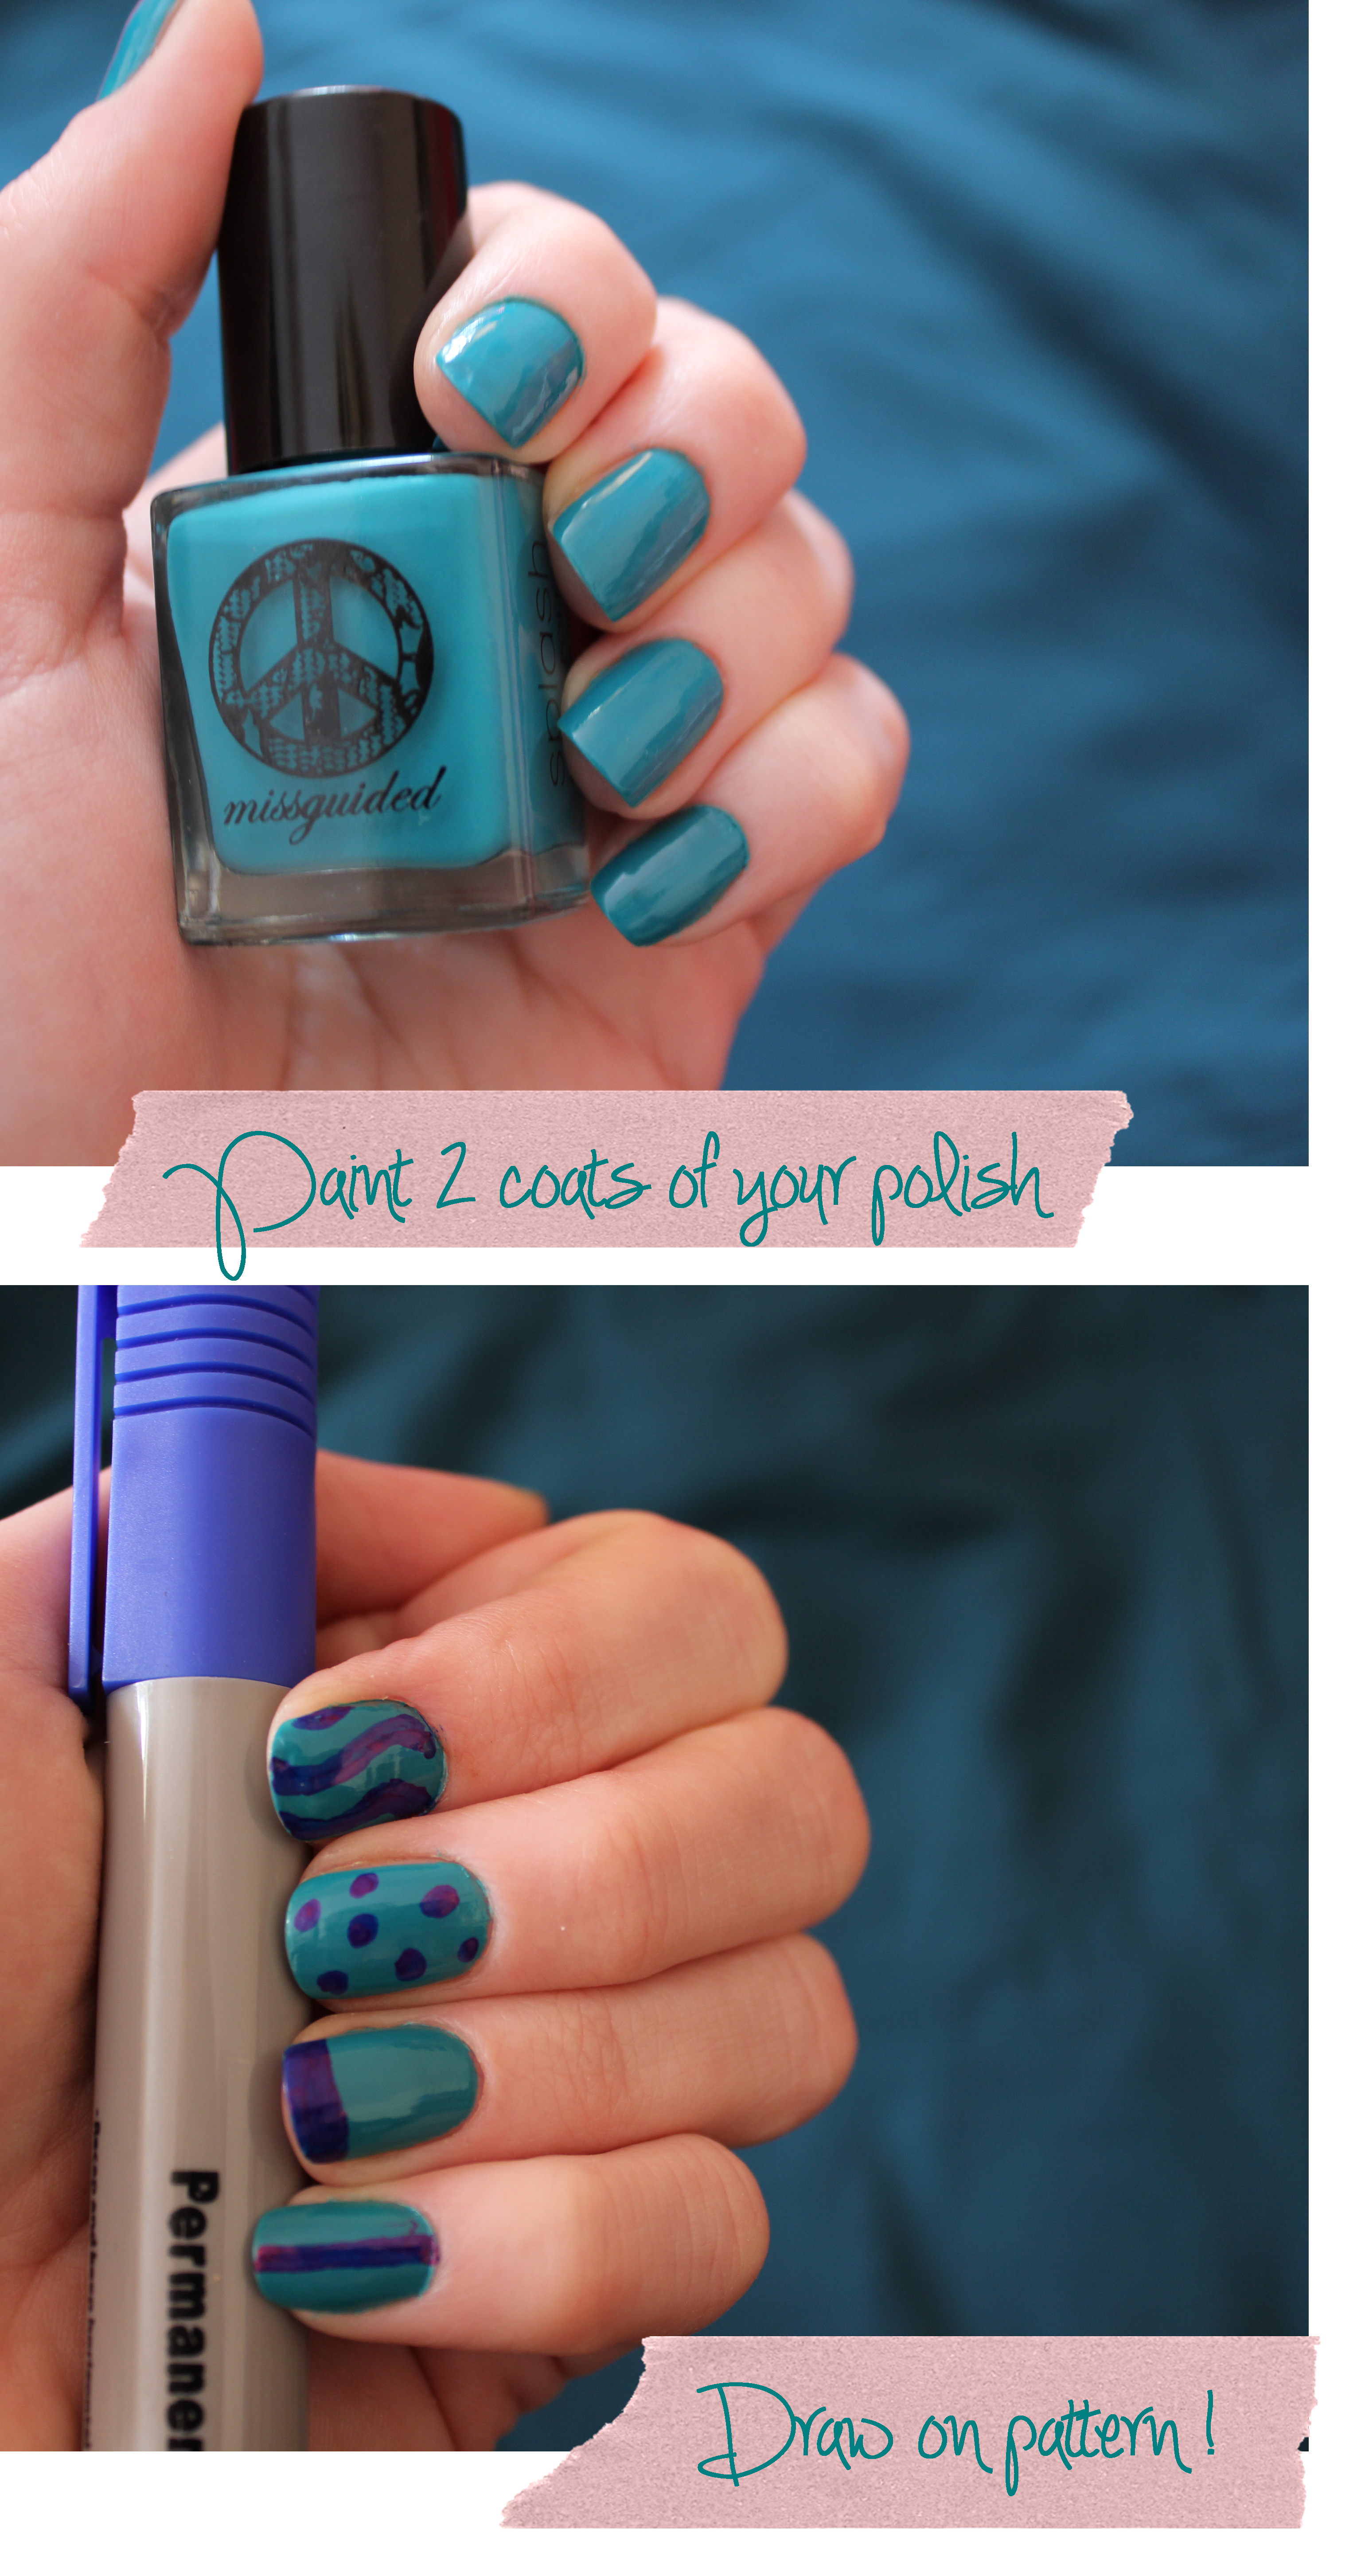 cassiefairy beauty tips - nail art pattern using permanent marker pens